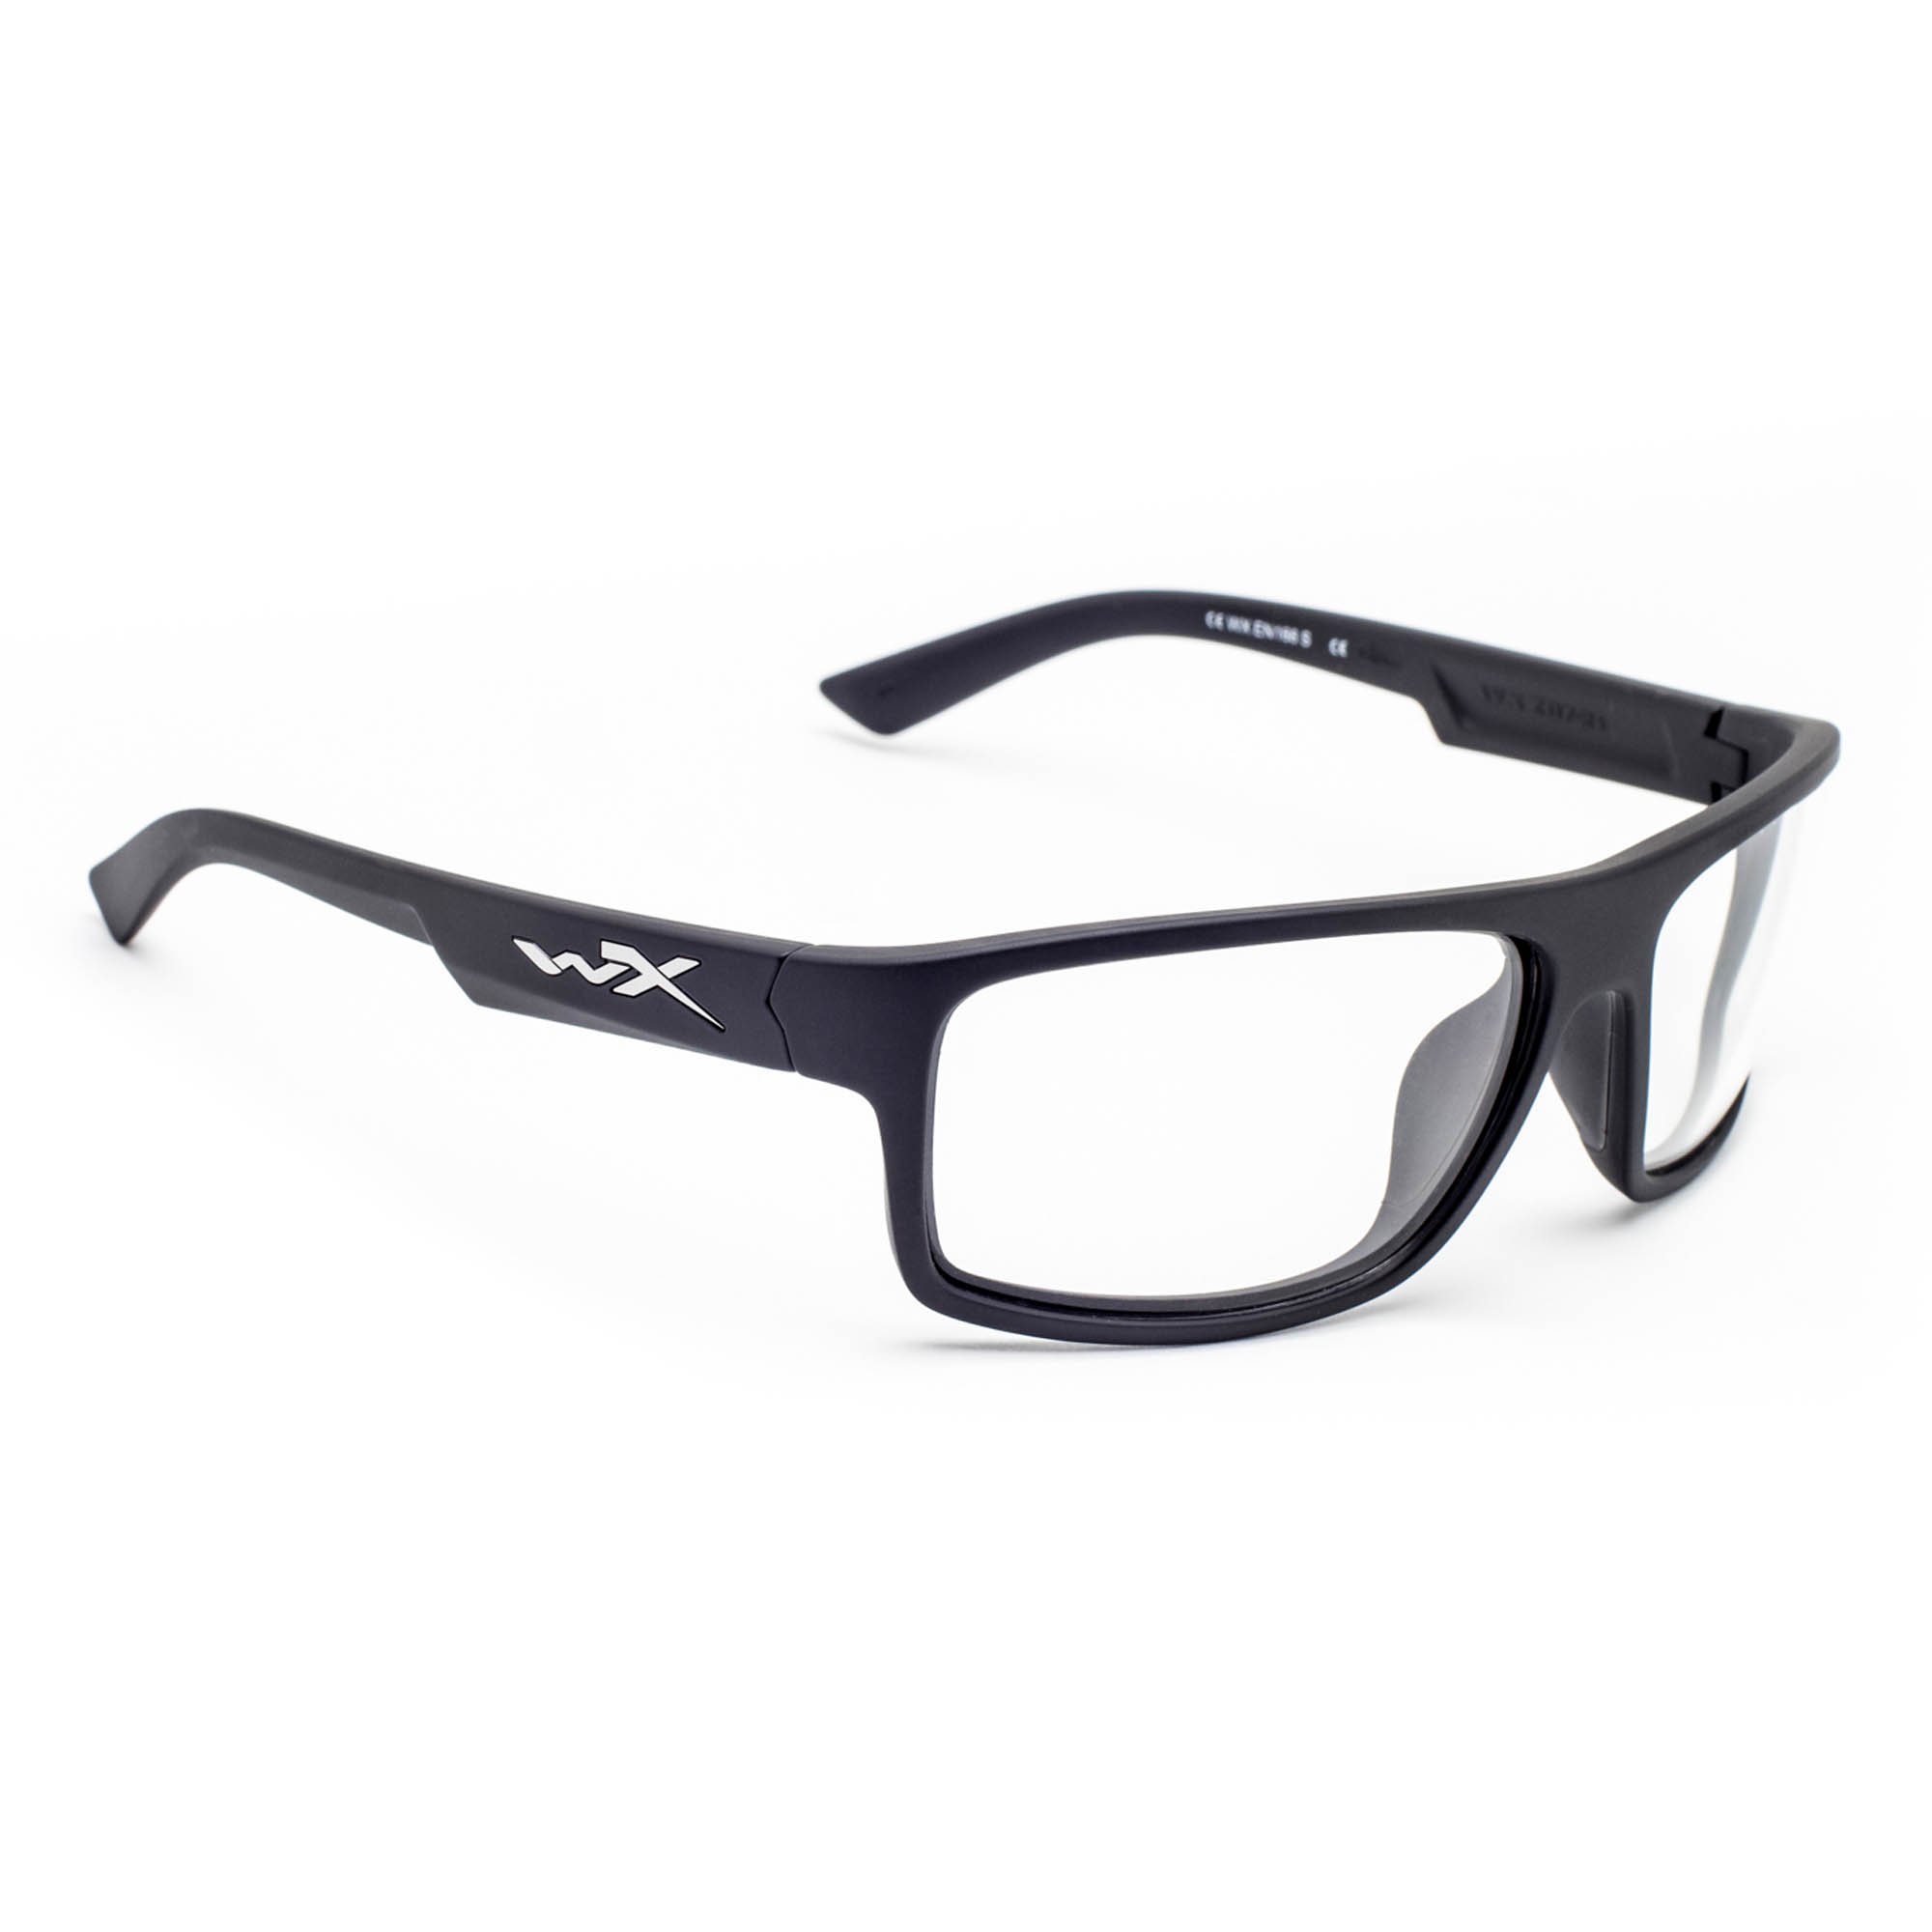 ATTENUTECH Lead Glasses, X-Ray Radiation Eye Protection.75mm Pb, Retro  Classic Style, Economical (Black)